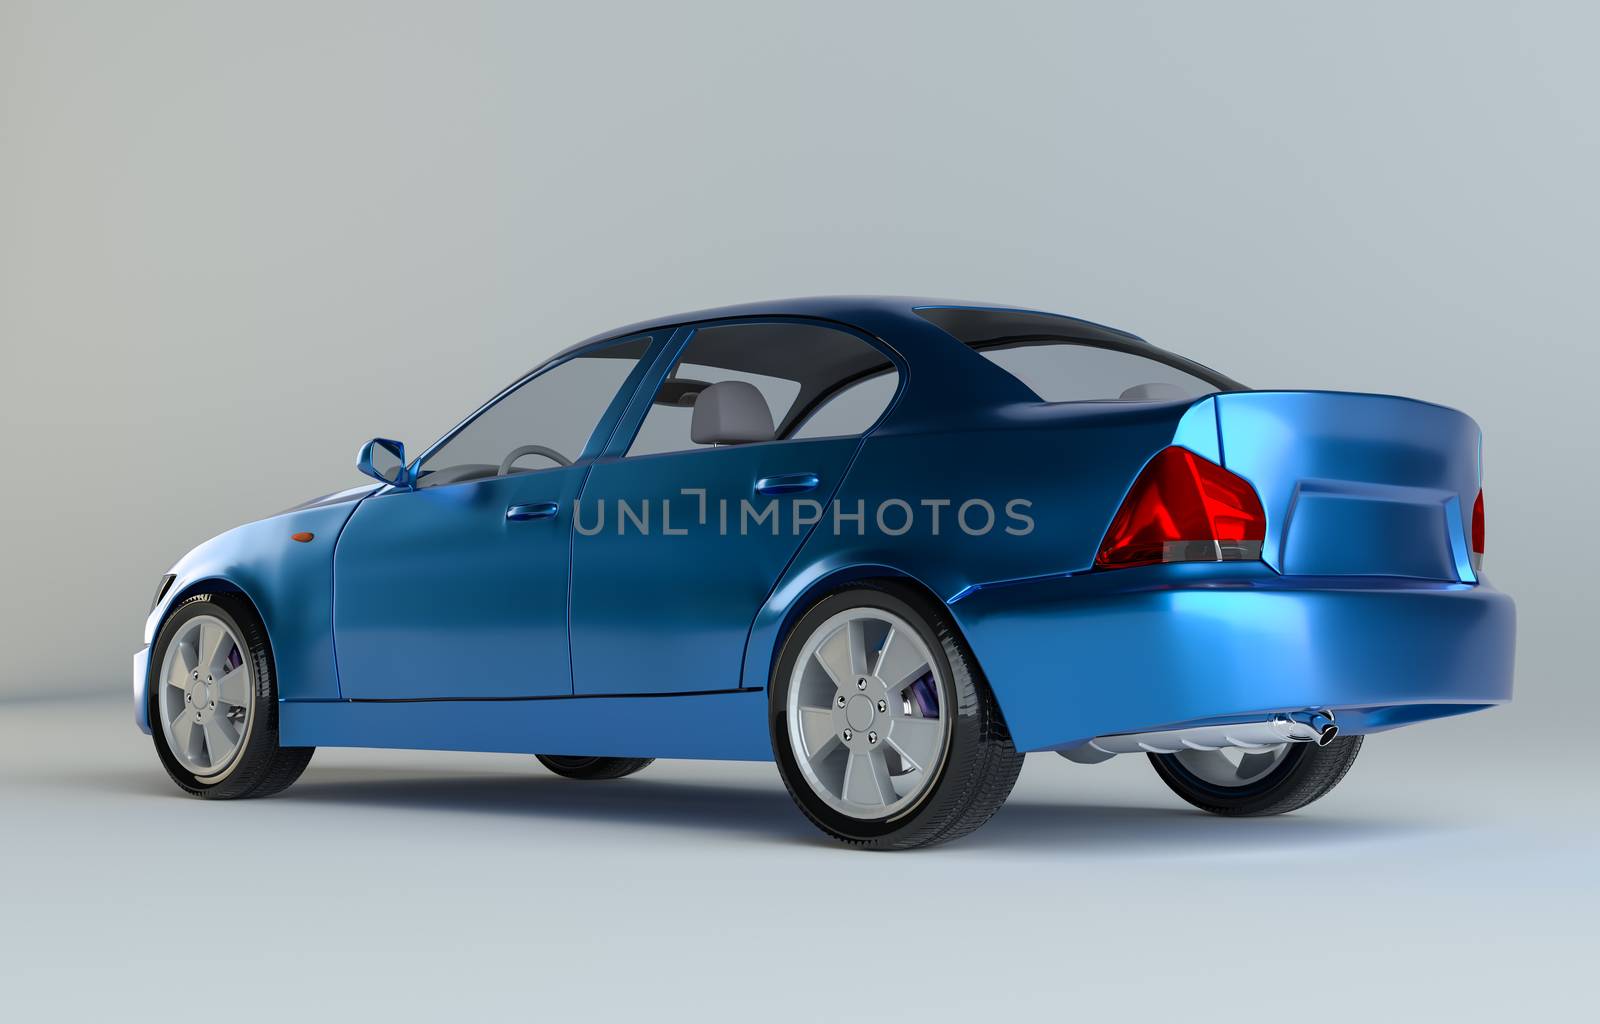 A CG render of a generic luxury blue sedan. 3d illustration